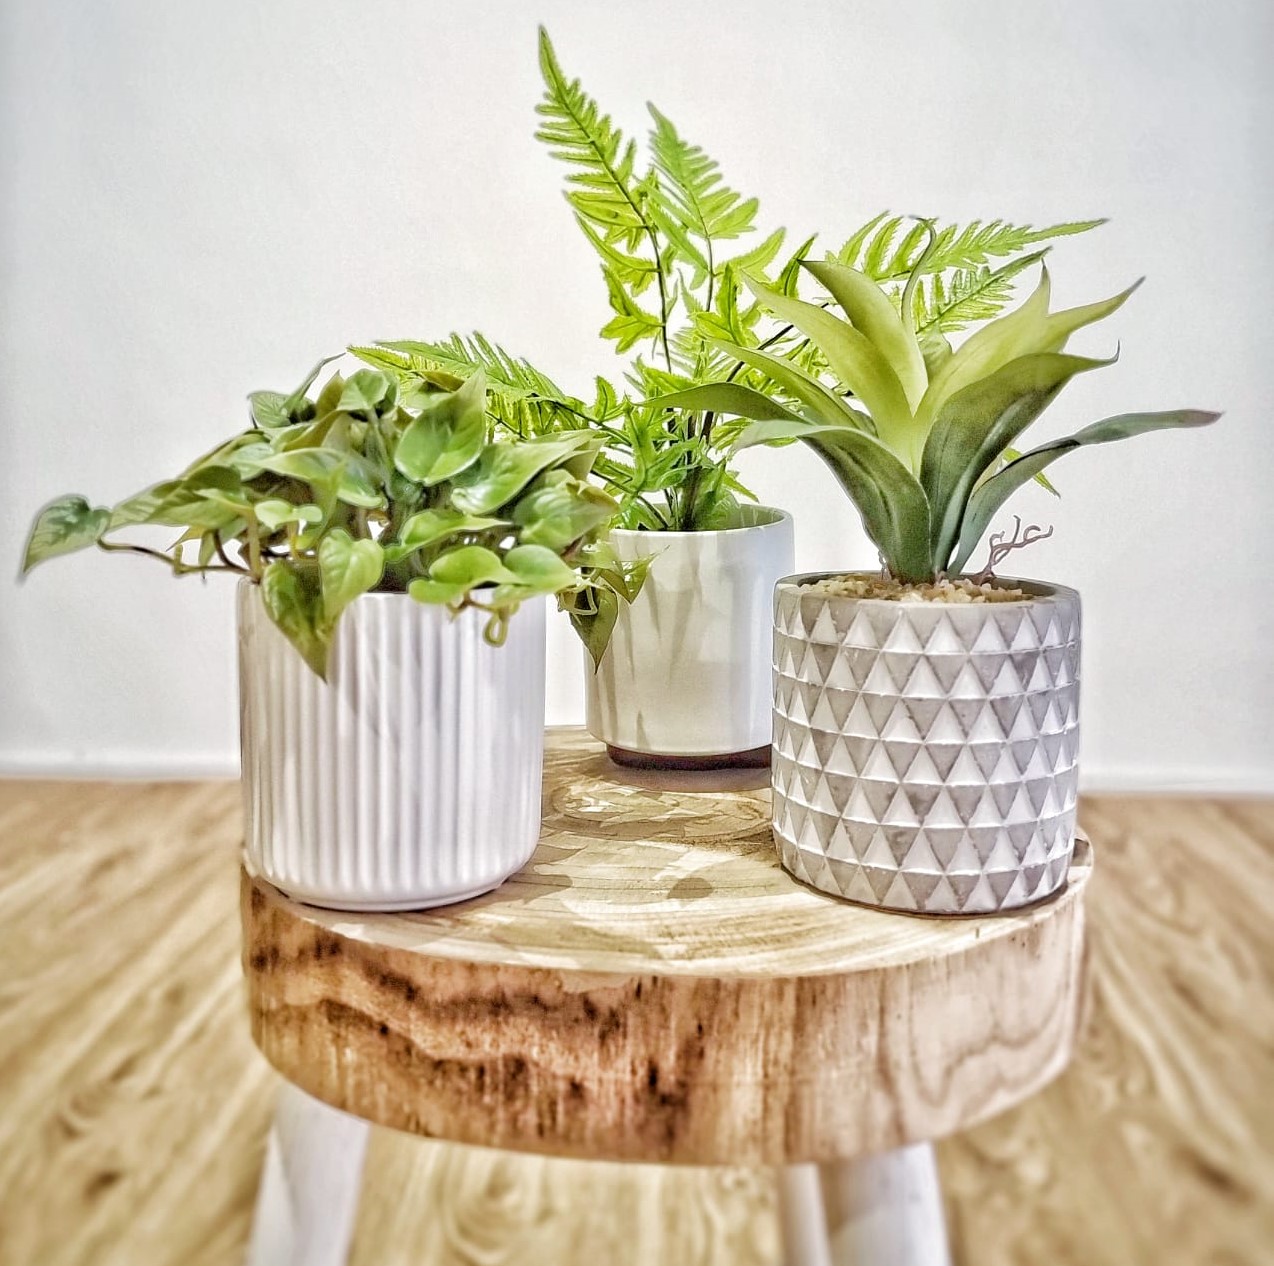 Table-Size Artificial Plants